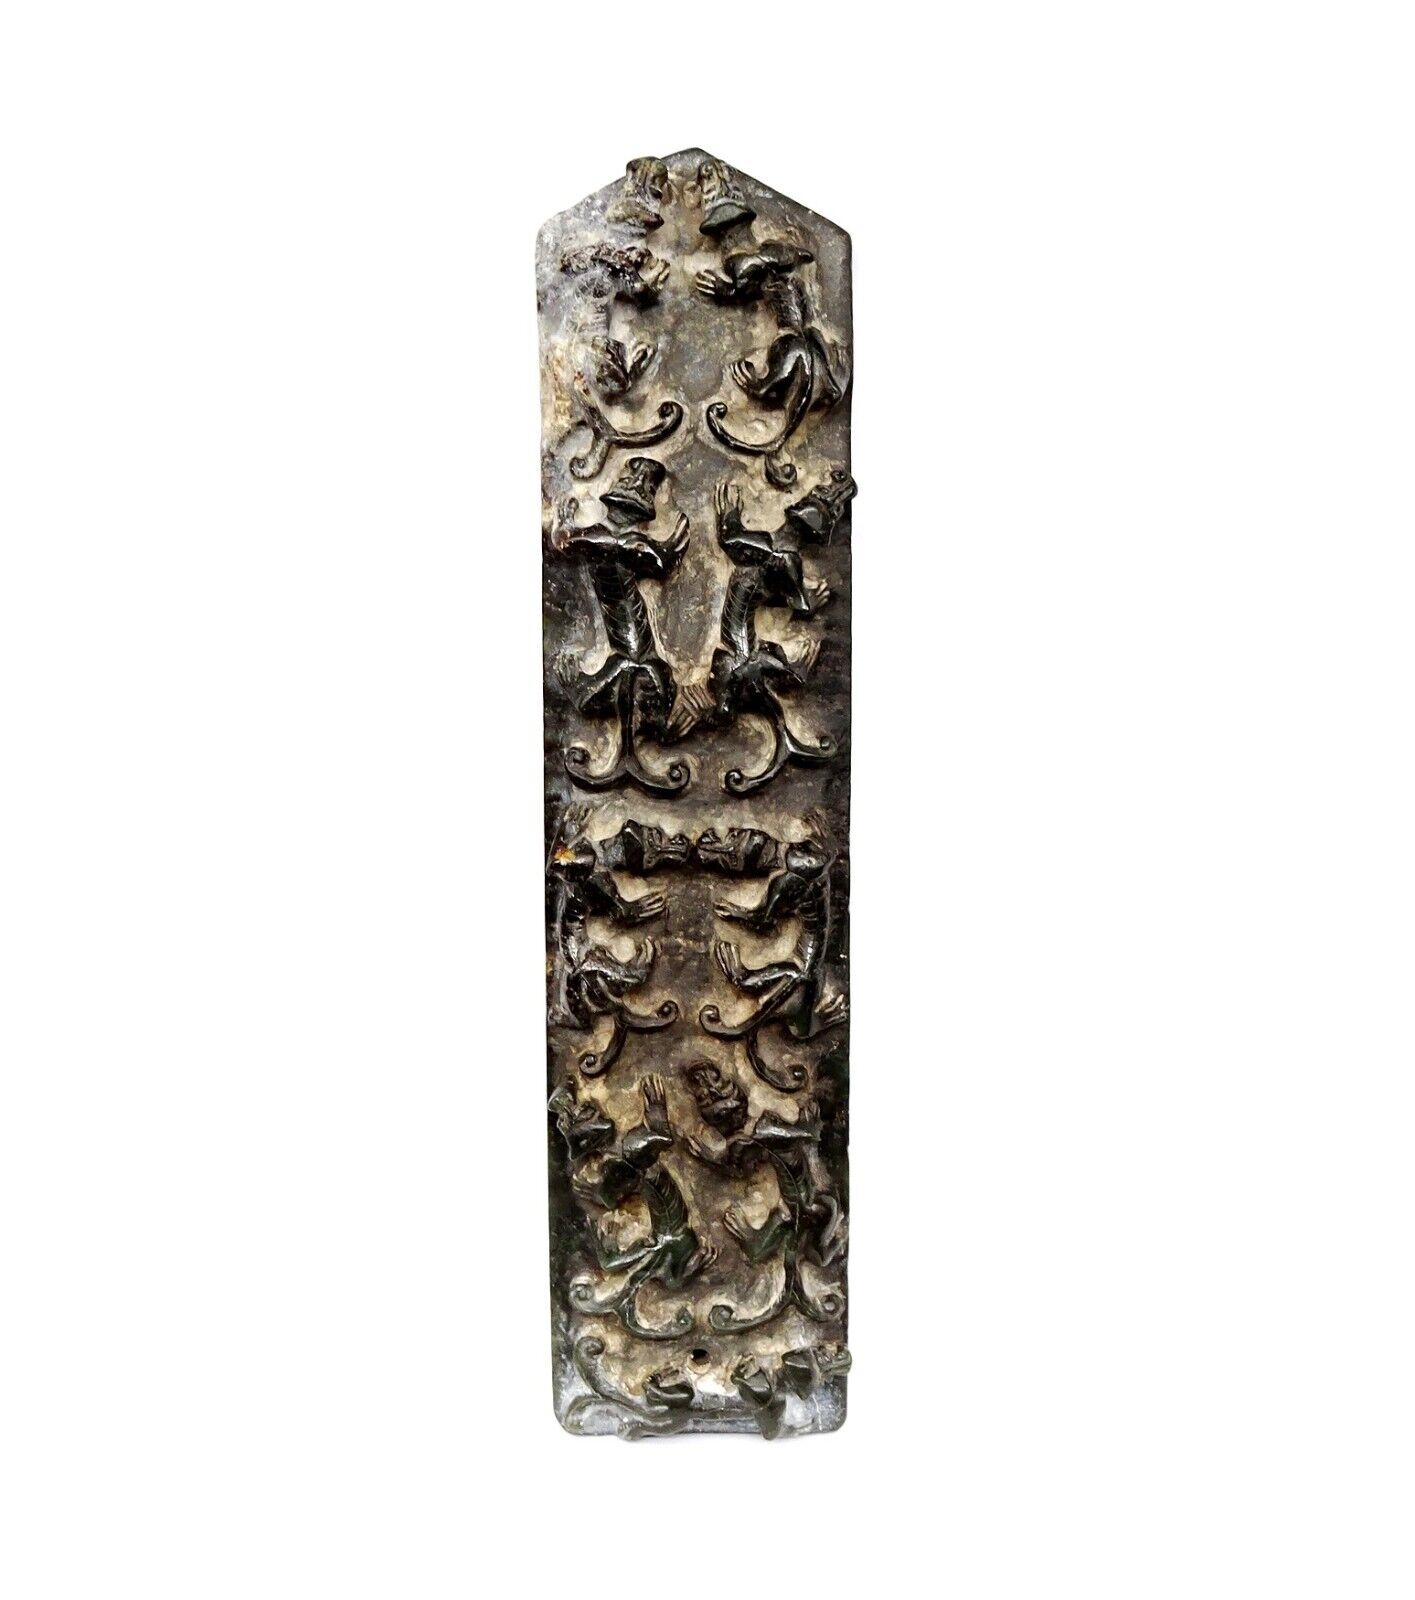 Tablet Mistletoe / Kuei Carved IN Jade - Dynasty Han 200 Ad -